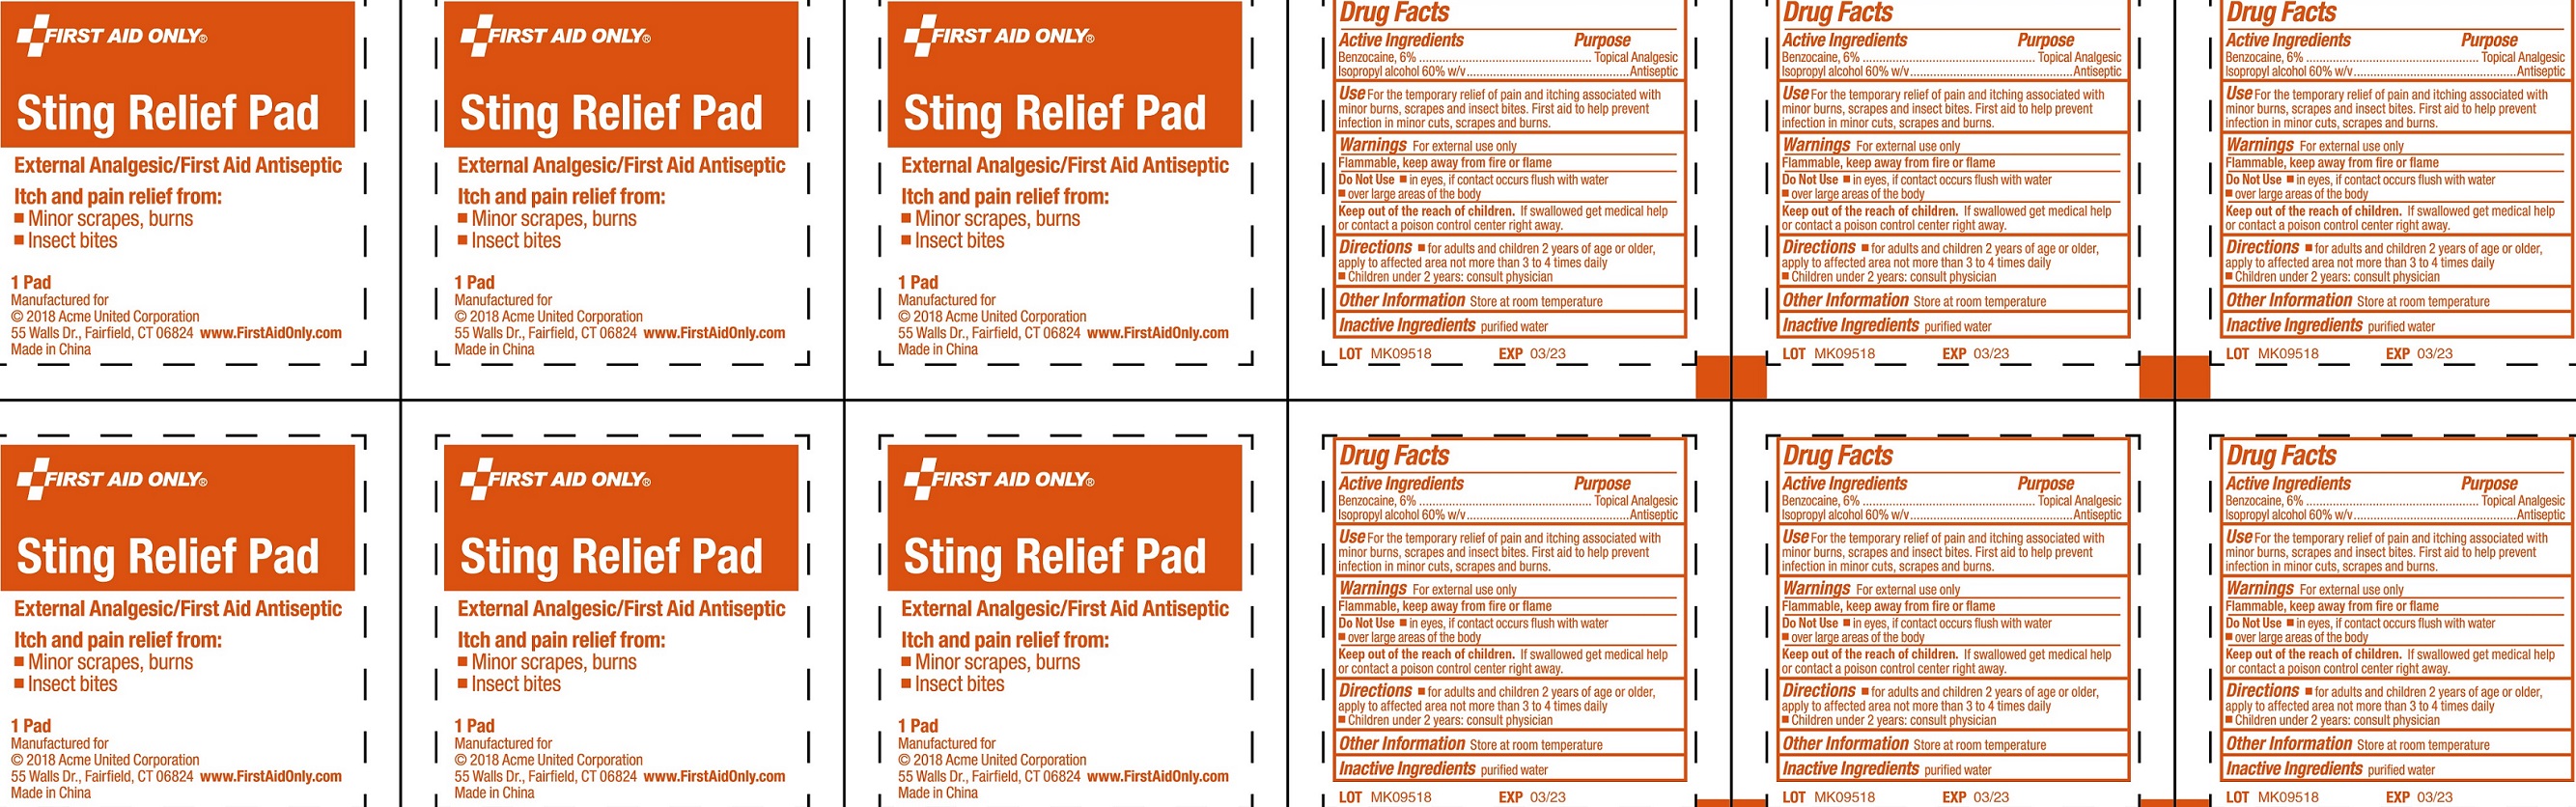 Sting Relief Pad | Benzocaine, Isopropyl Alcohol Swab Breastfeeding